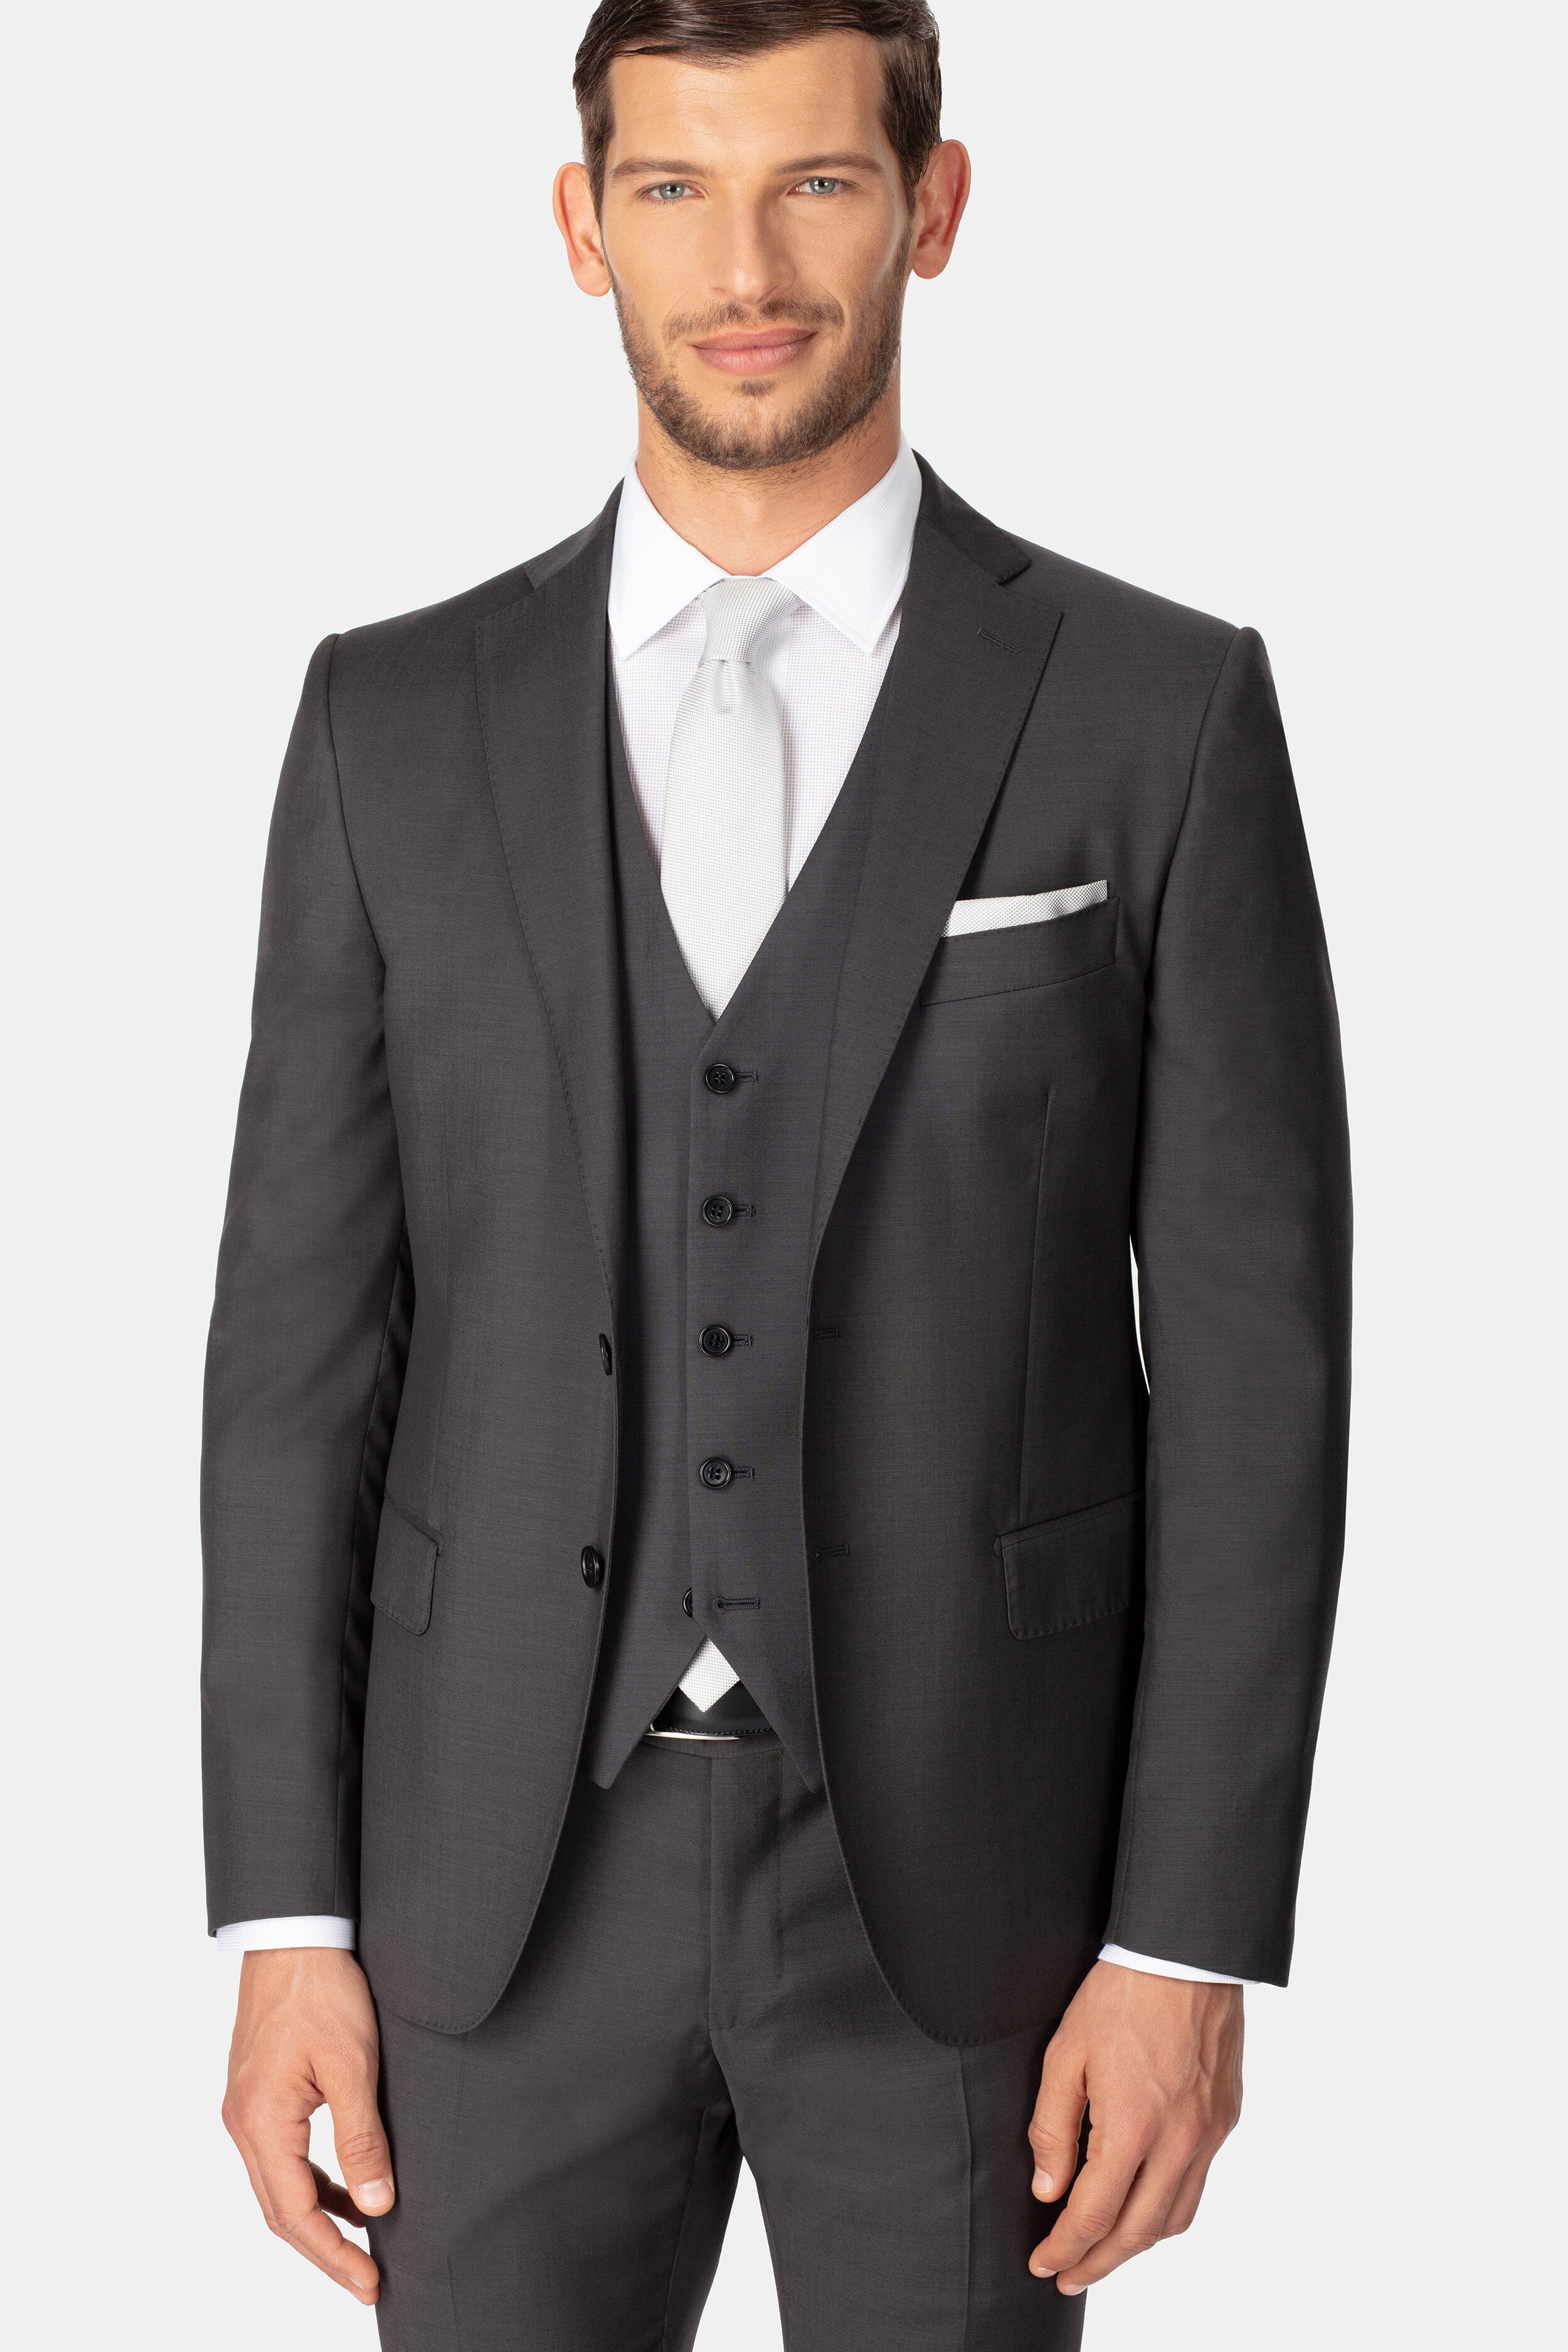 Slim fit grey wool suit - Charcoal grey